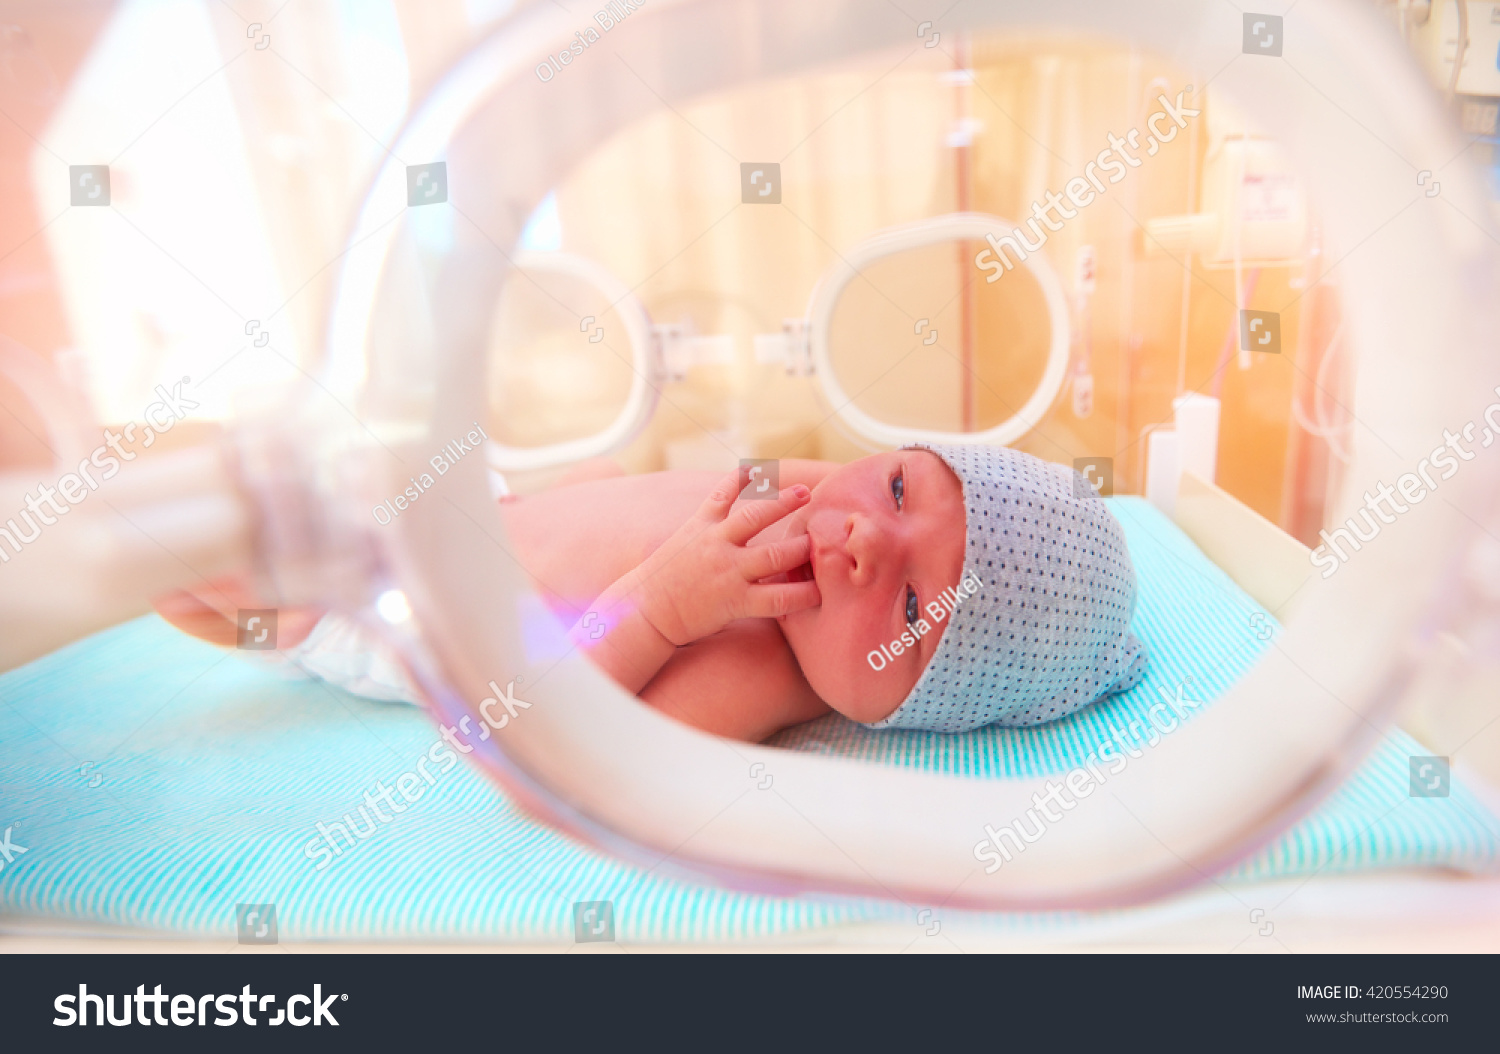 newborn baby lying inside the infant incubator in hospital, sucking fingers #420554290